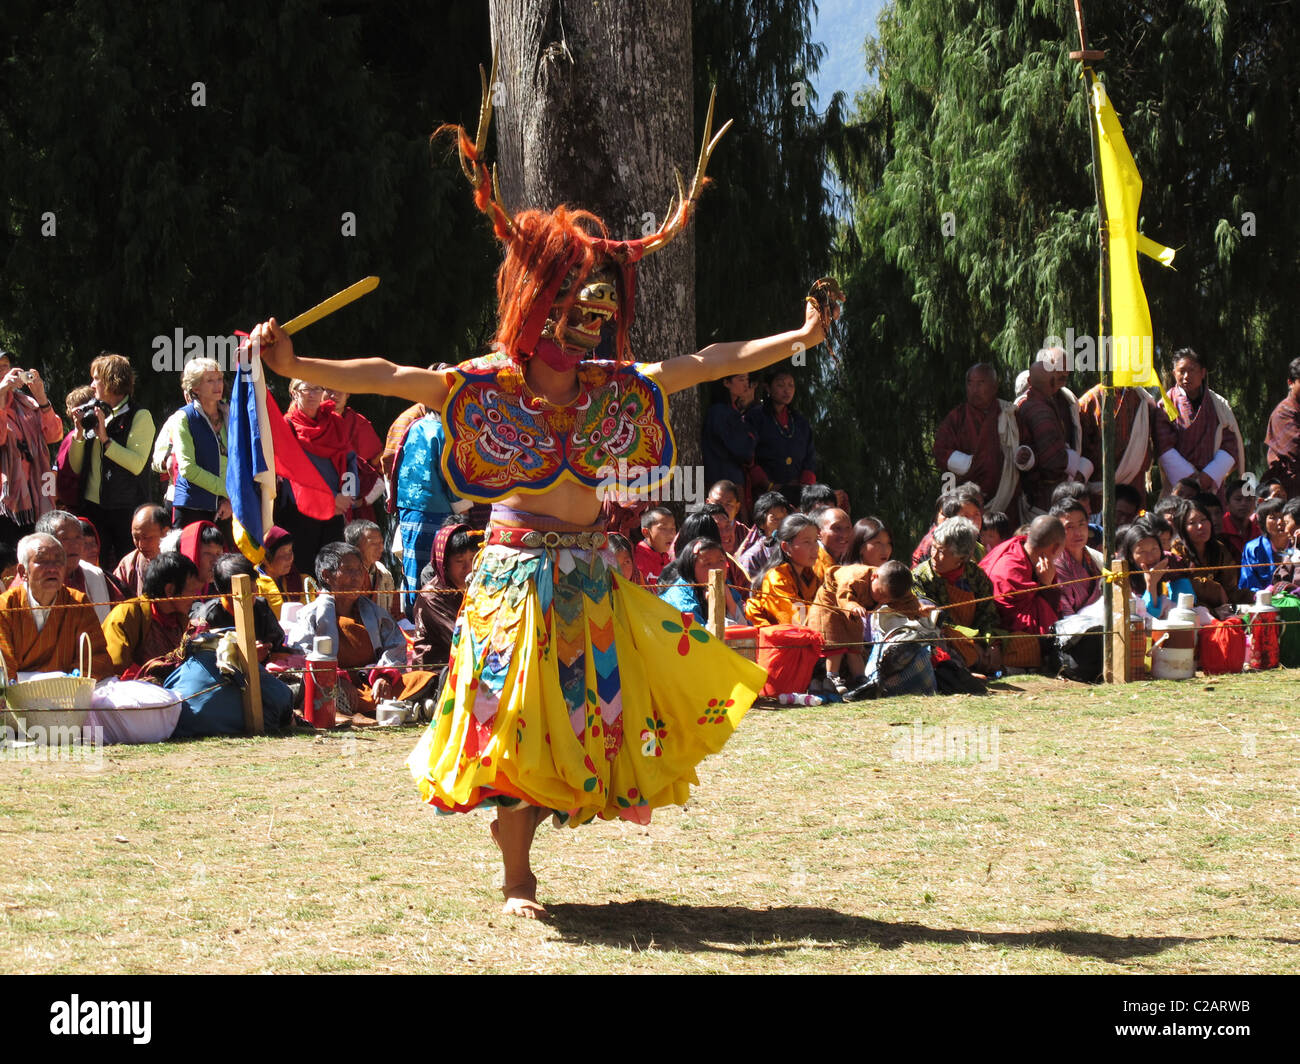 Dancer and audience, Talo festival, Bhutan Stock Photo